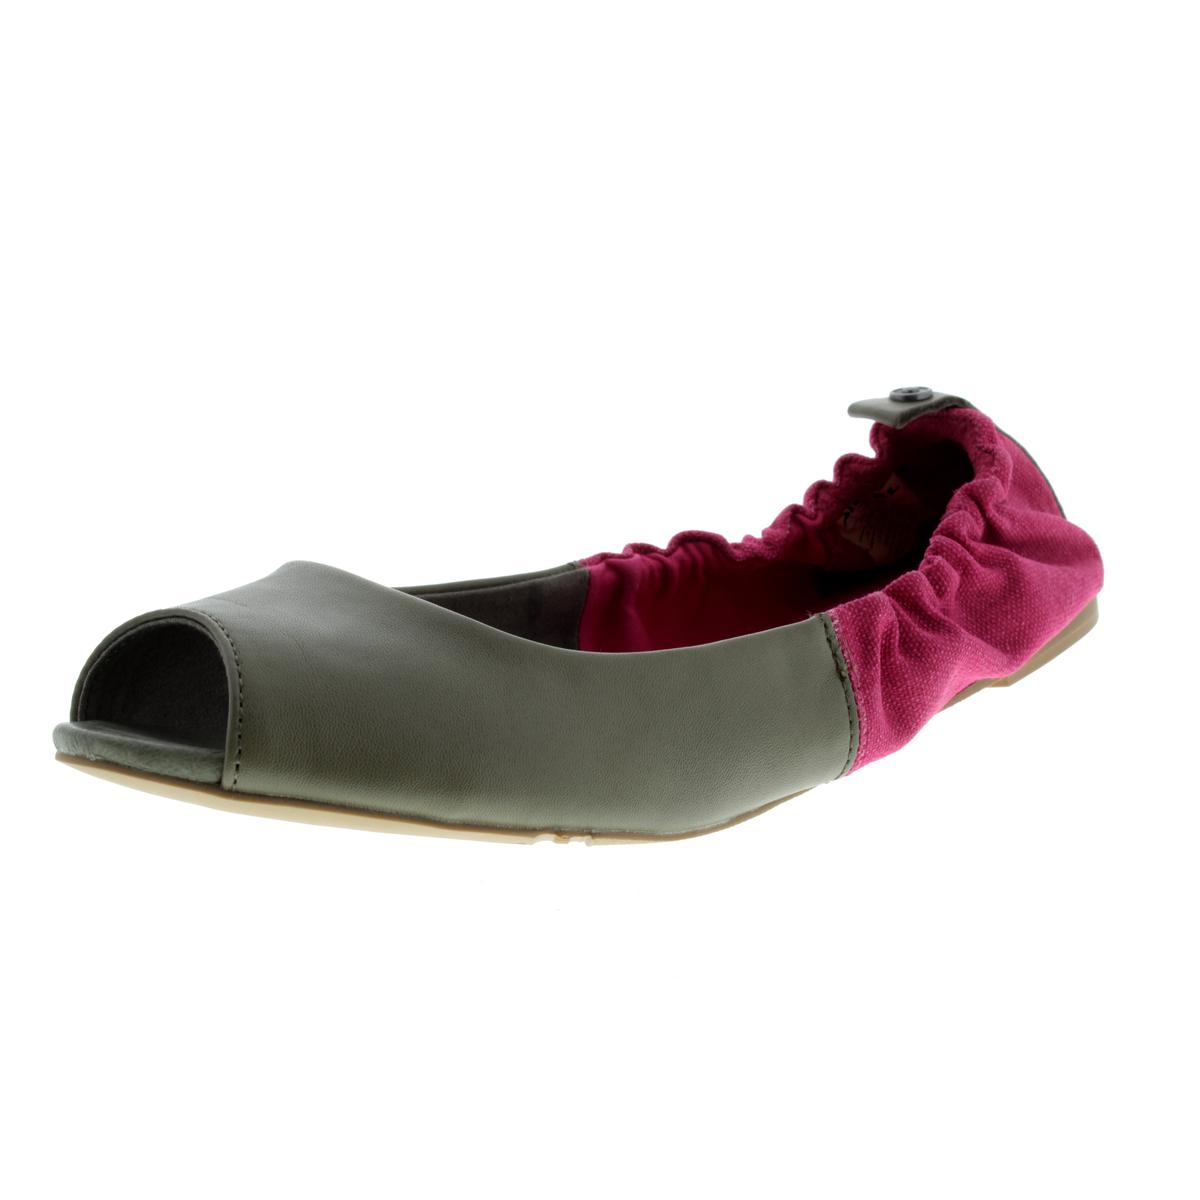 Diesel 2194 Womens Pointy Girls Tippy Peep-Toe Ballet Flats Shoes BHFO ...